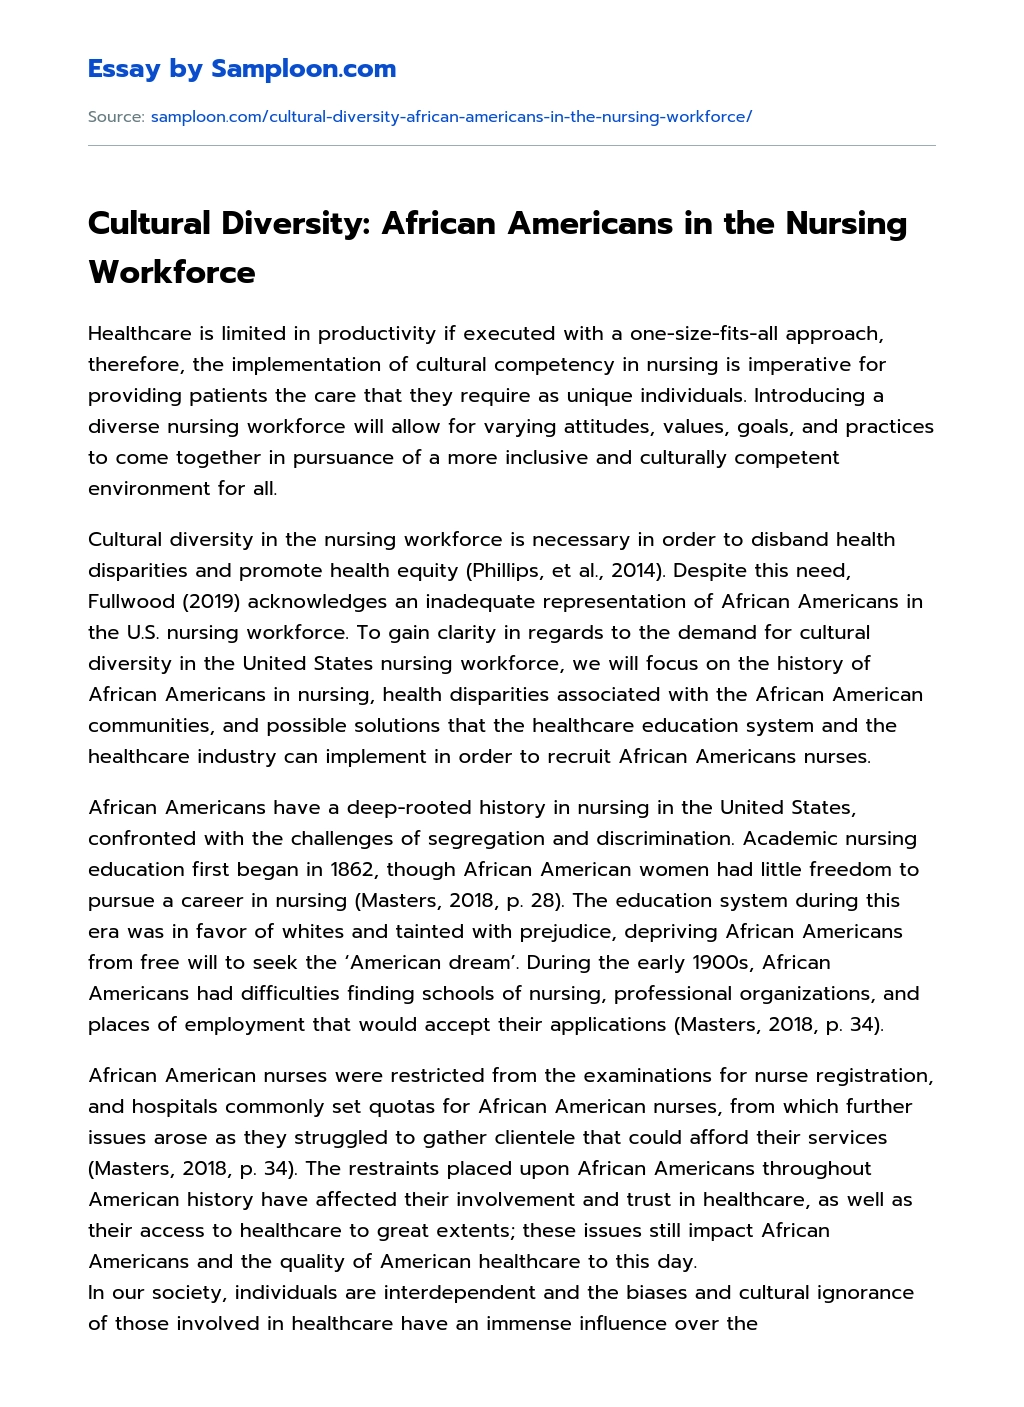 Cultural Diversity: African Americans in the Nursing Workforce  essay